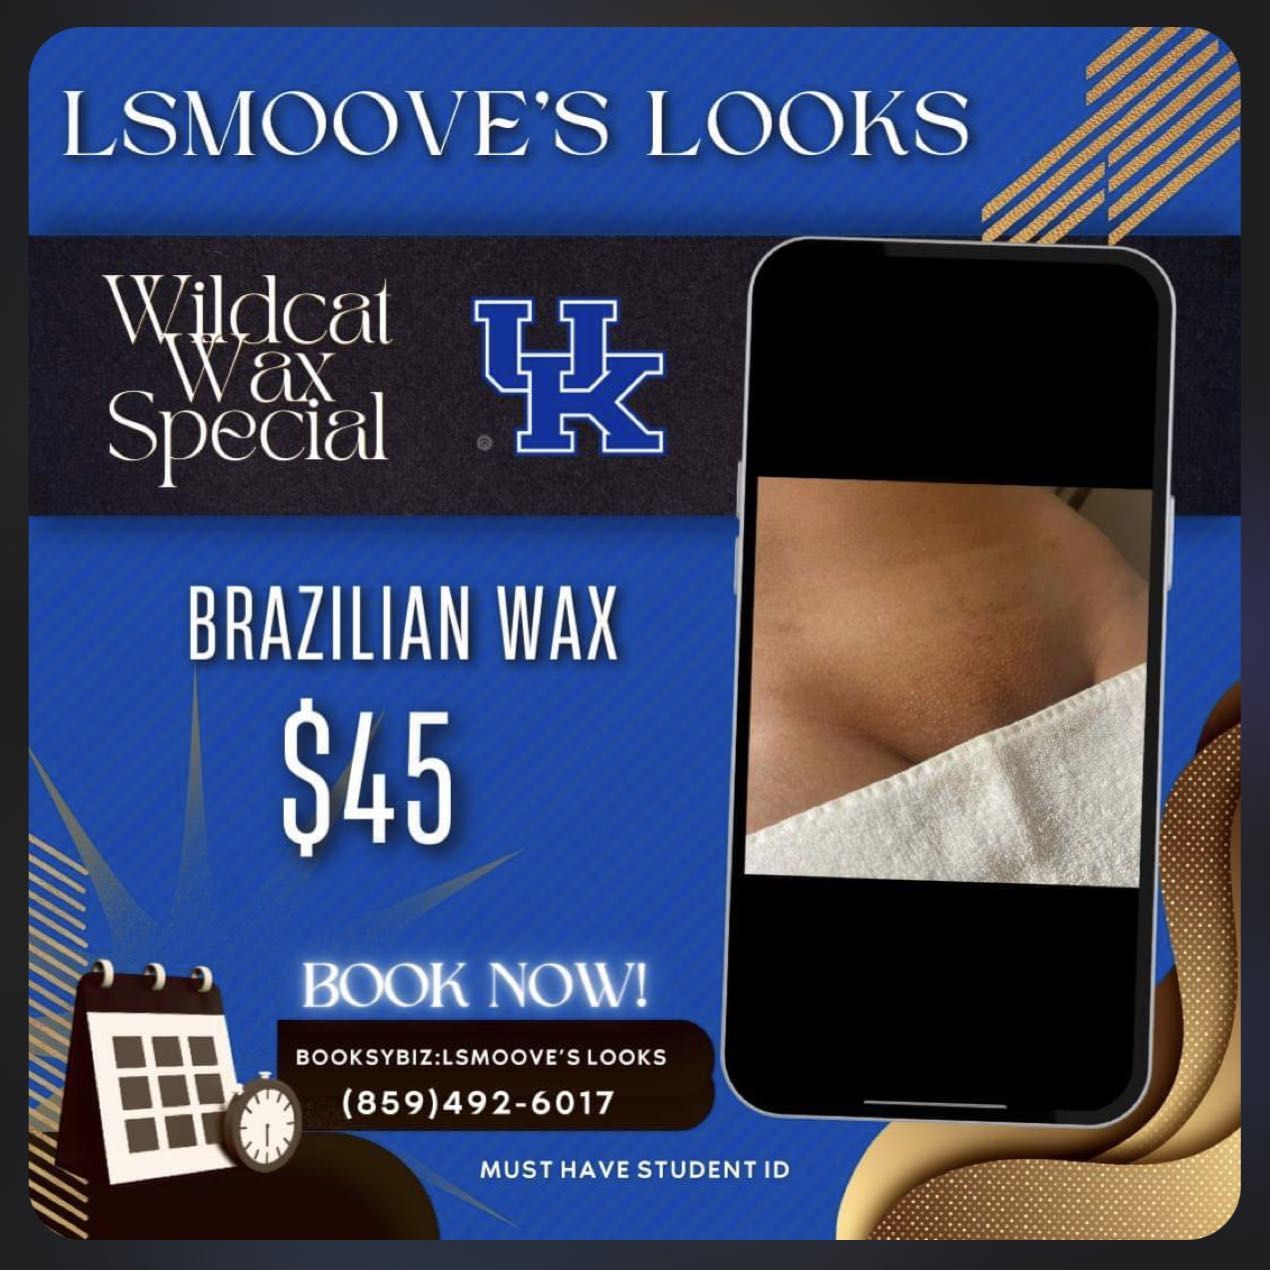 Wildcat wax special ( must have ID) portfolio